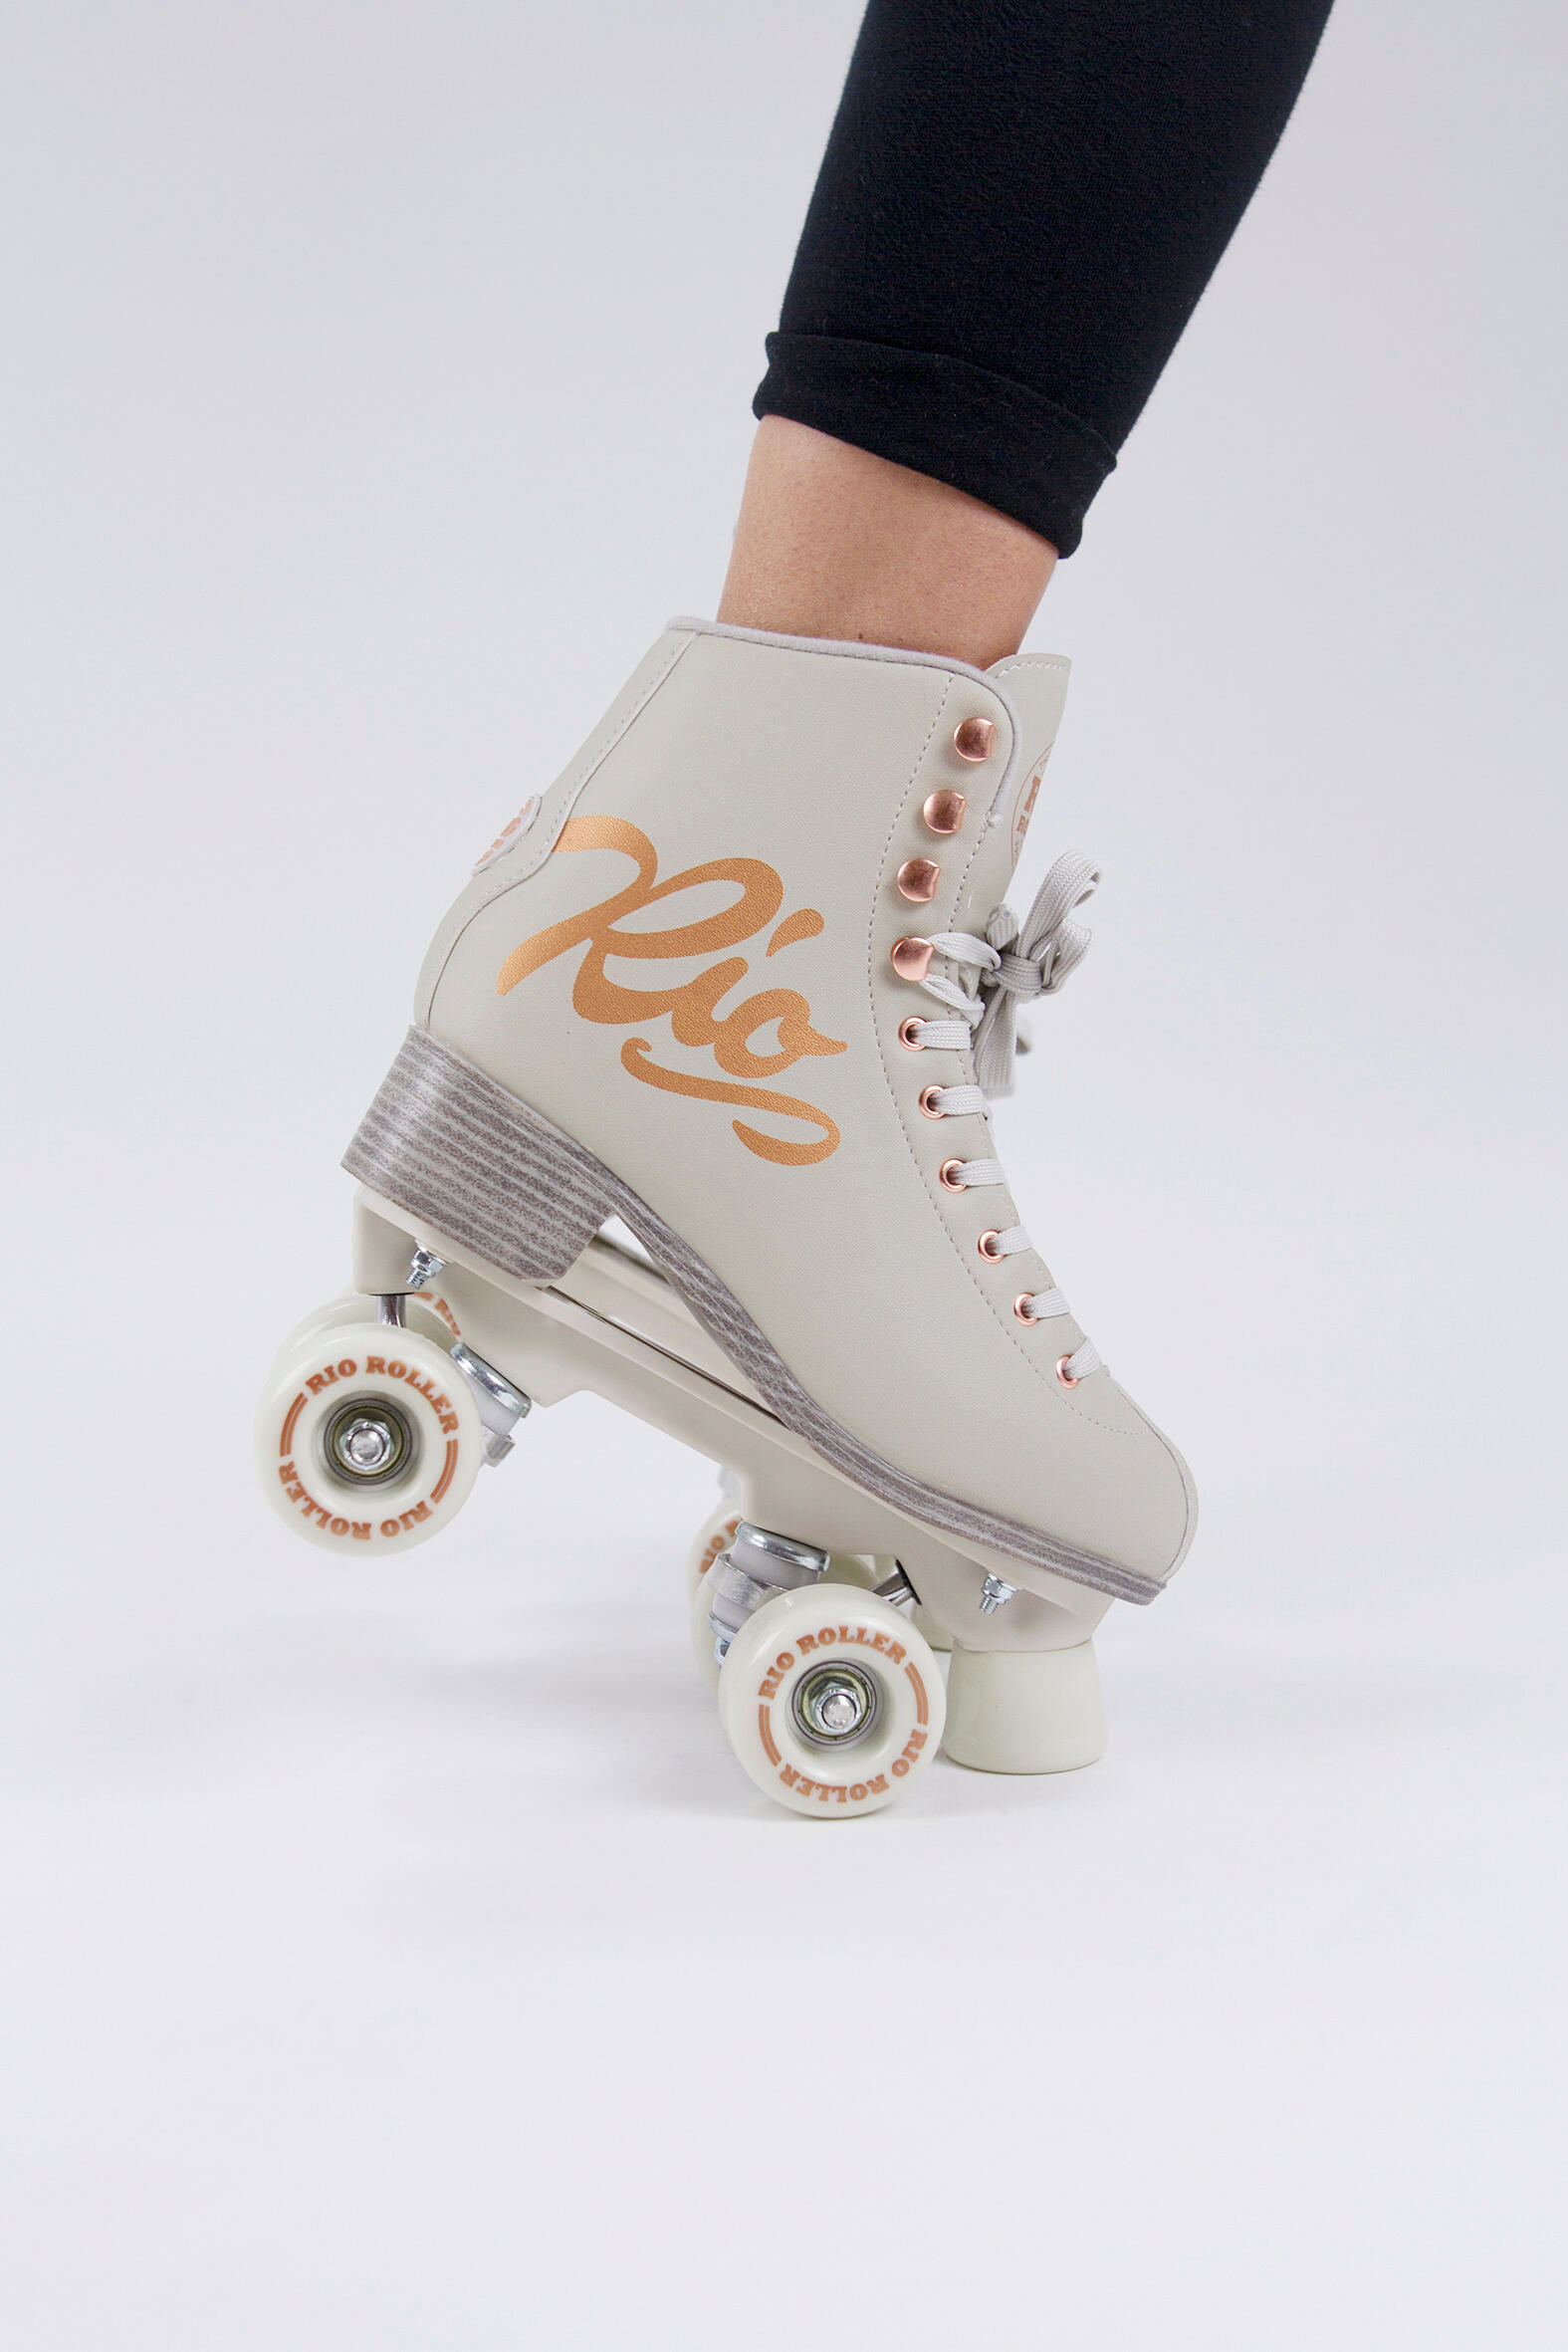 Rose Figure Quad Roller Skates 5/5